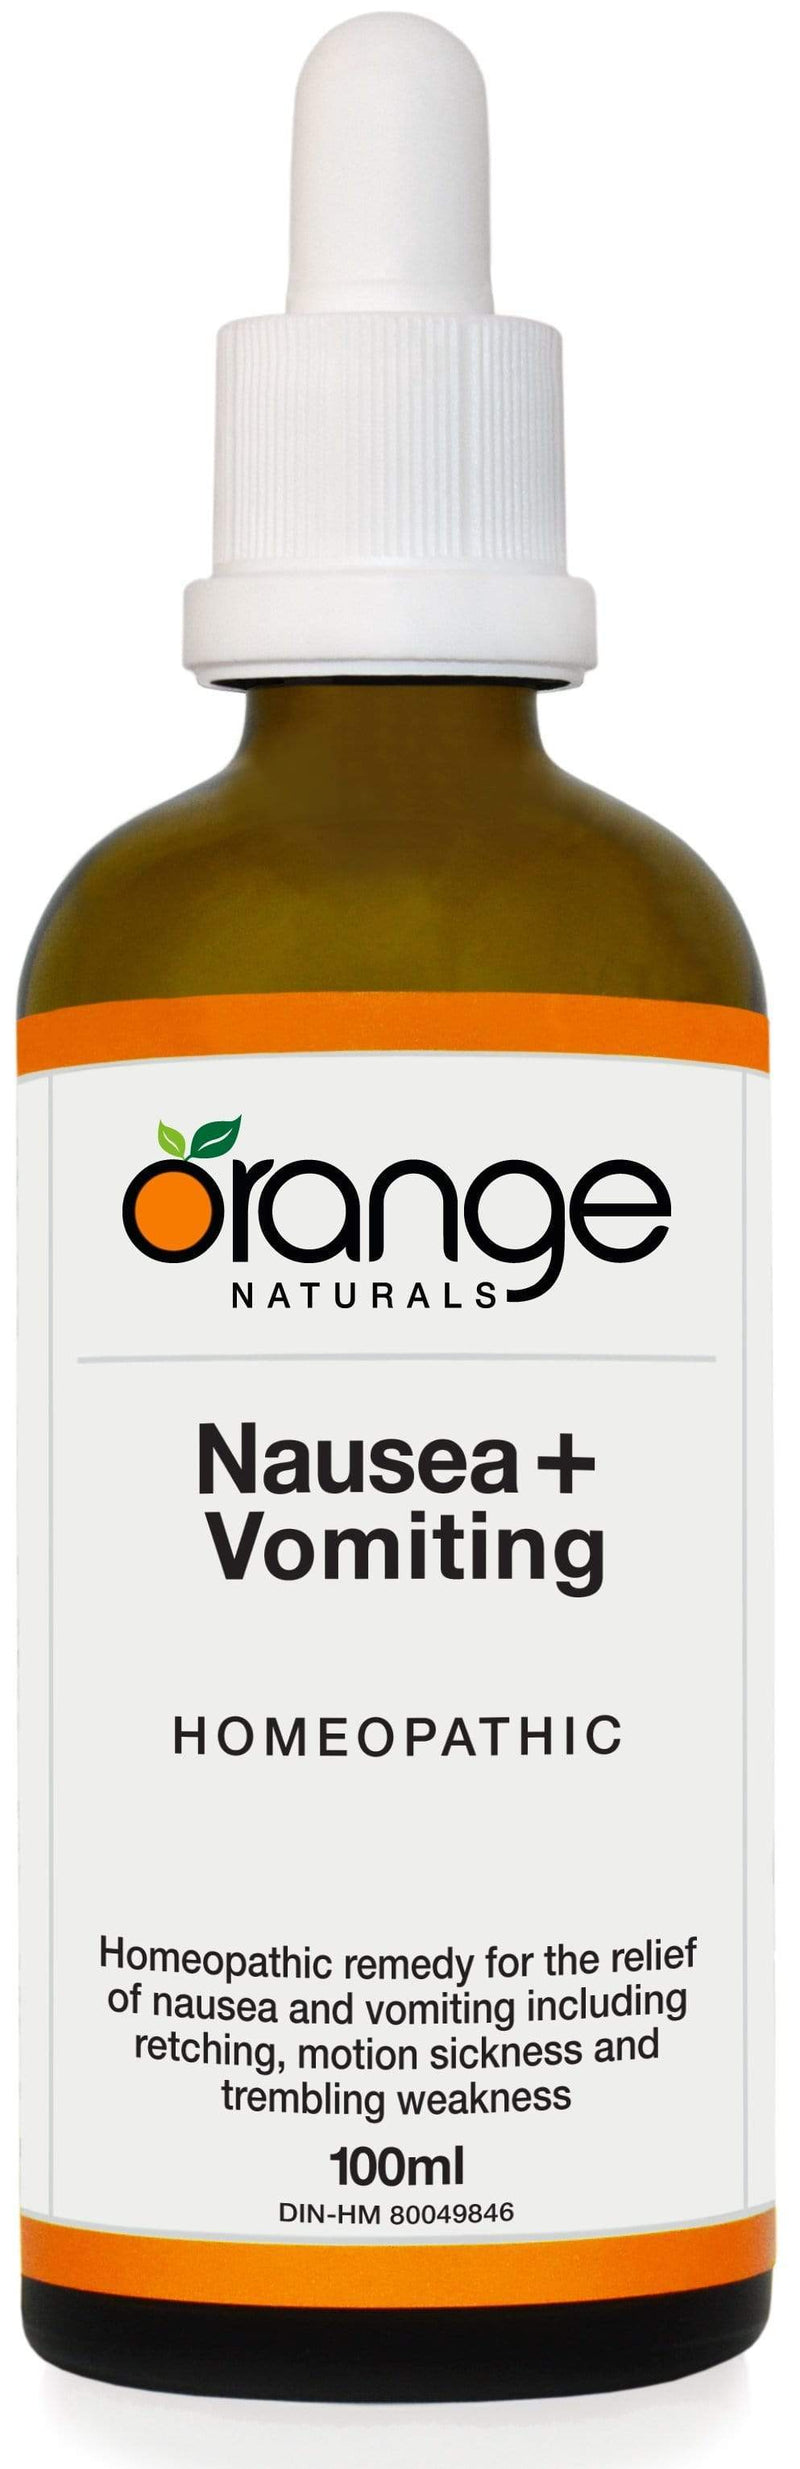 Orange Naturals Homeopathic Nausea + Vomiting